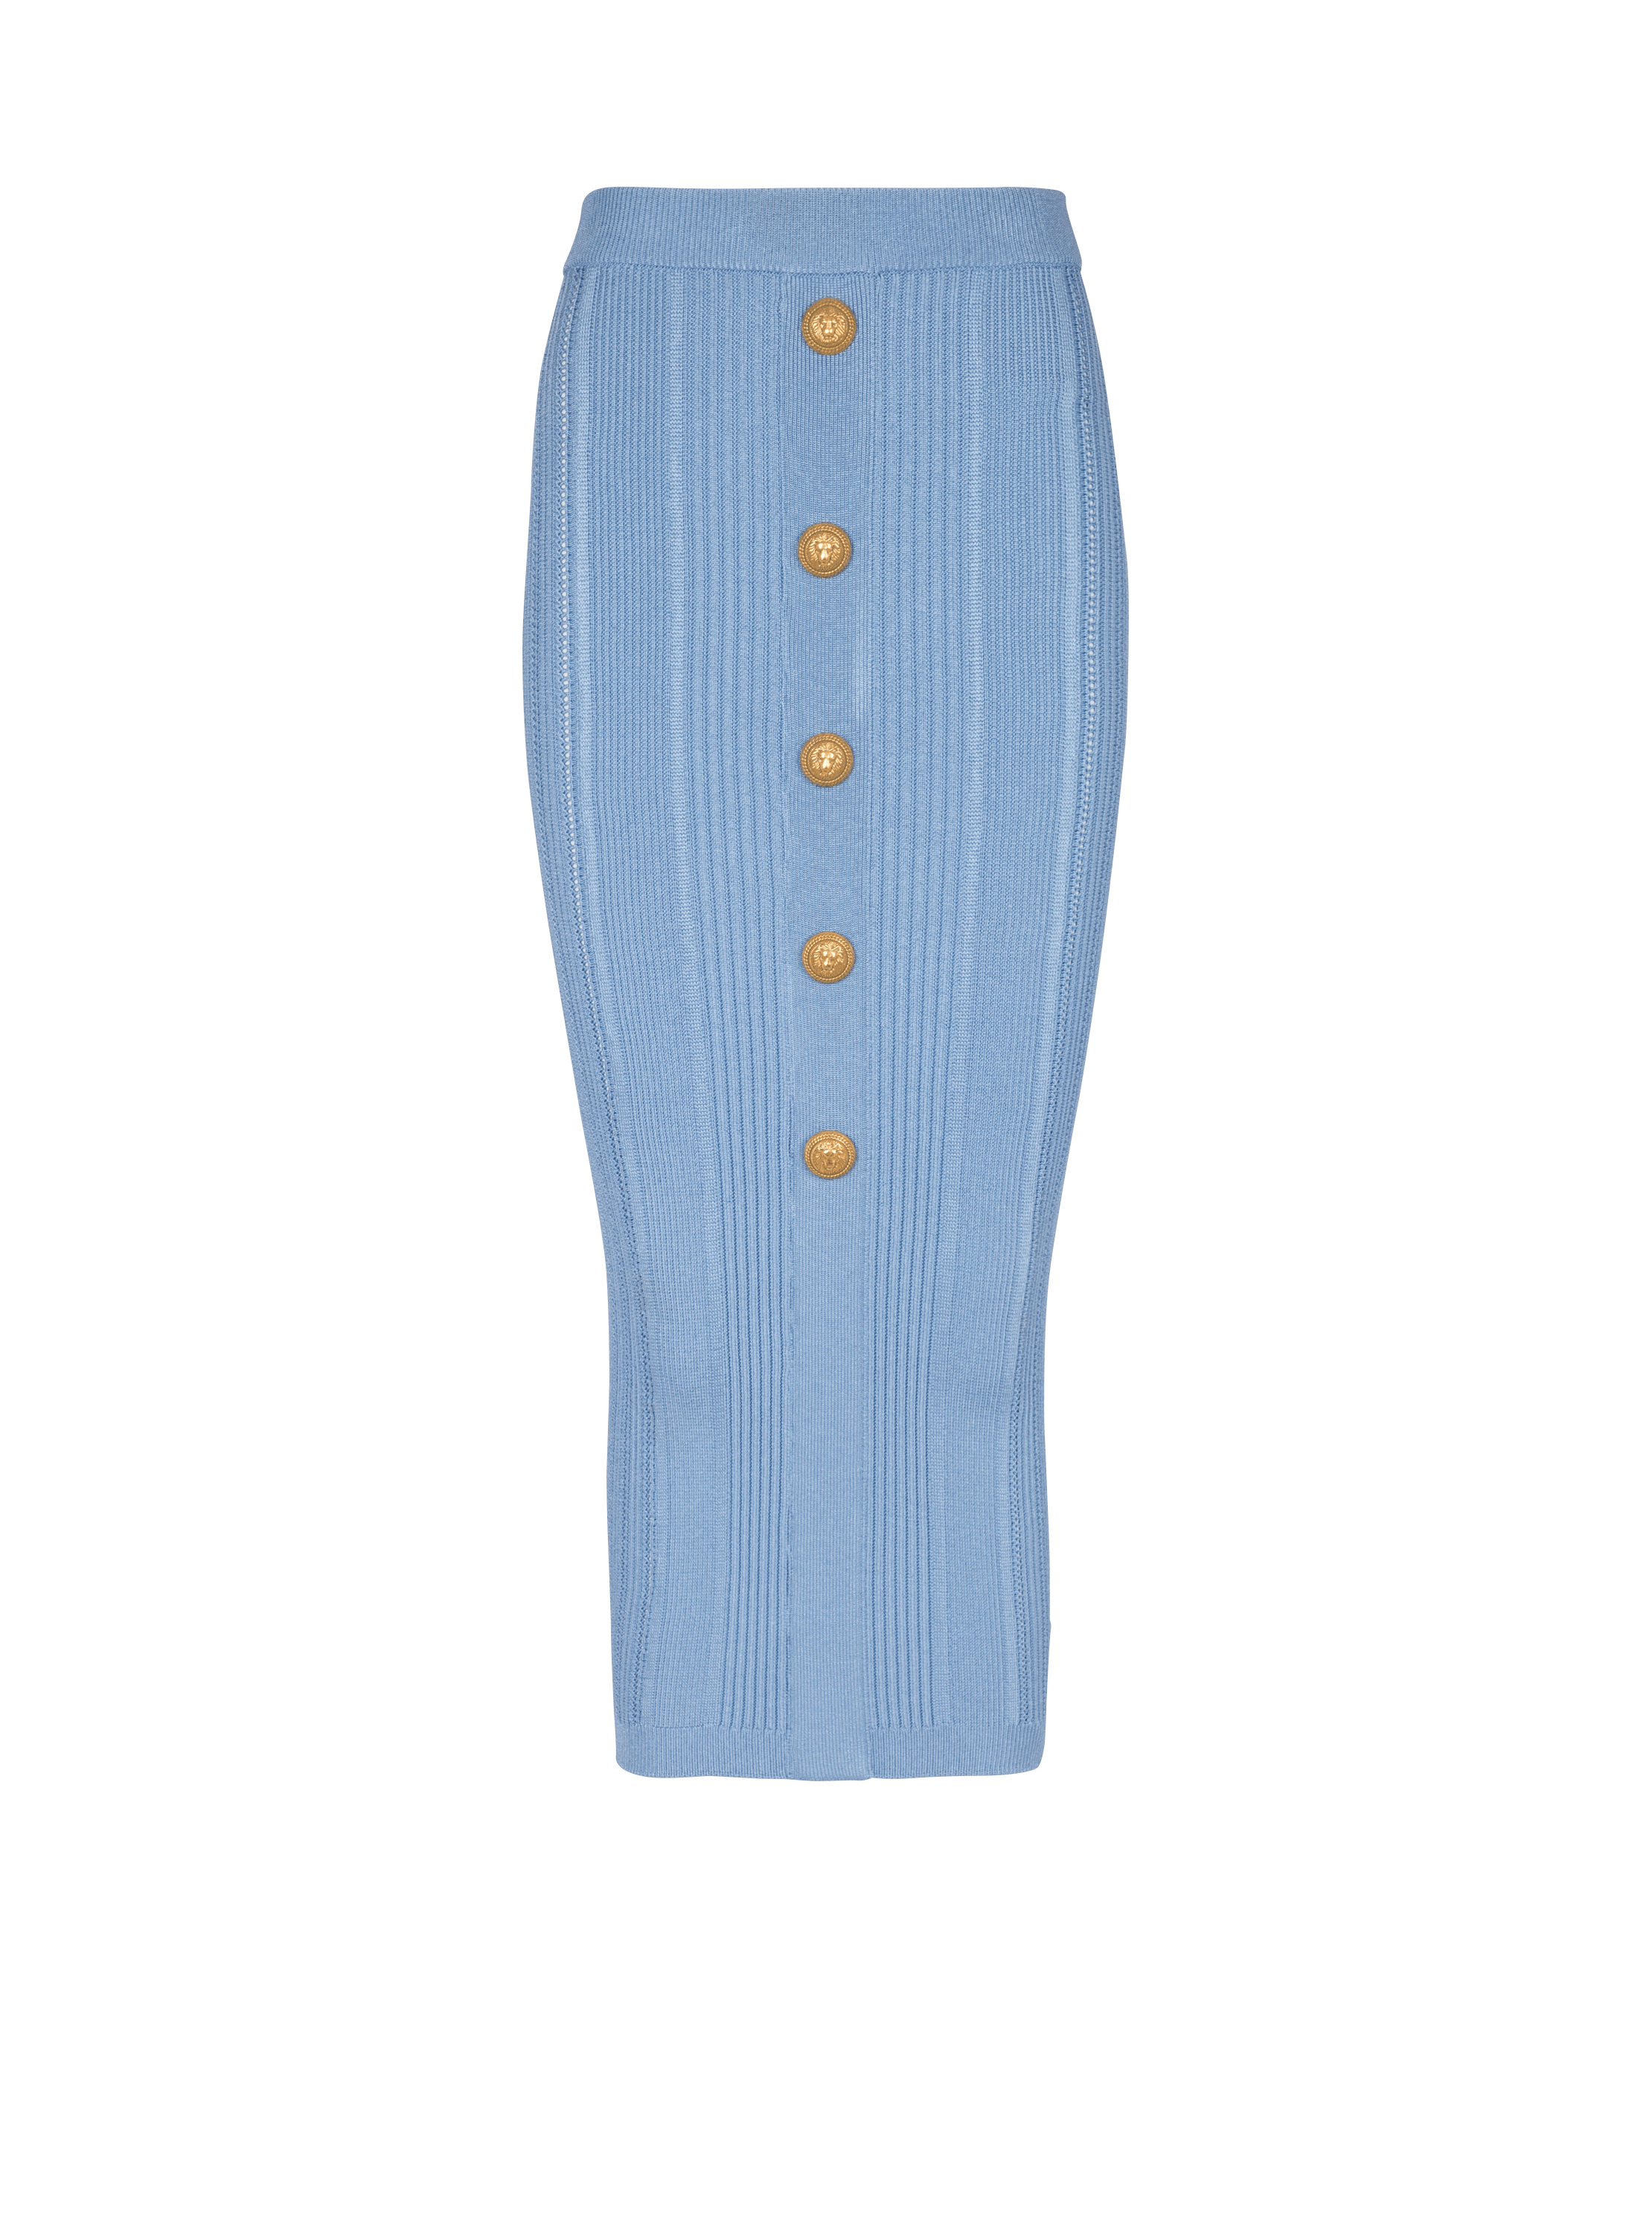 5-button knit skirt, blue, hi-res